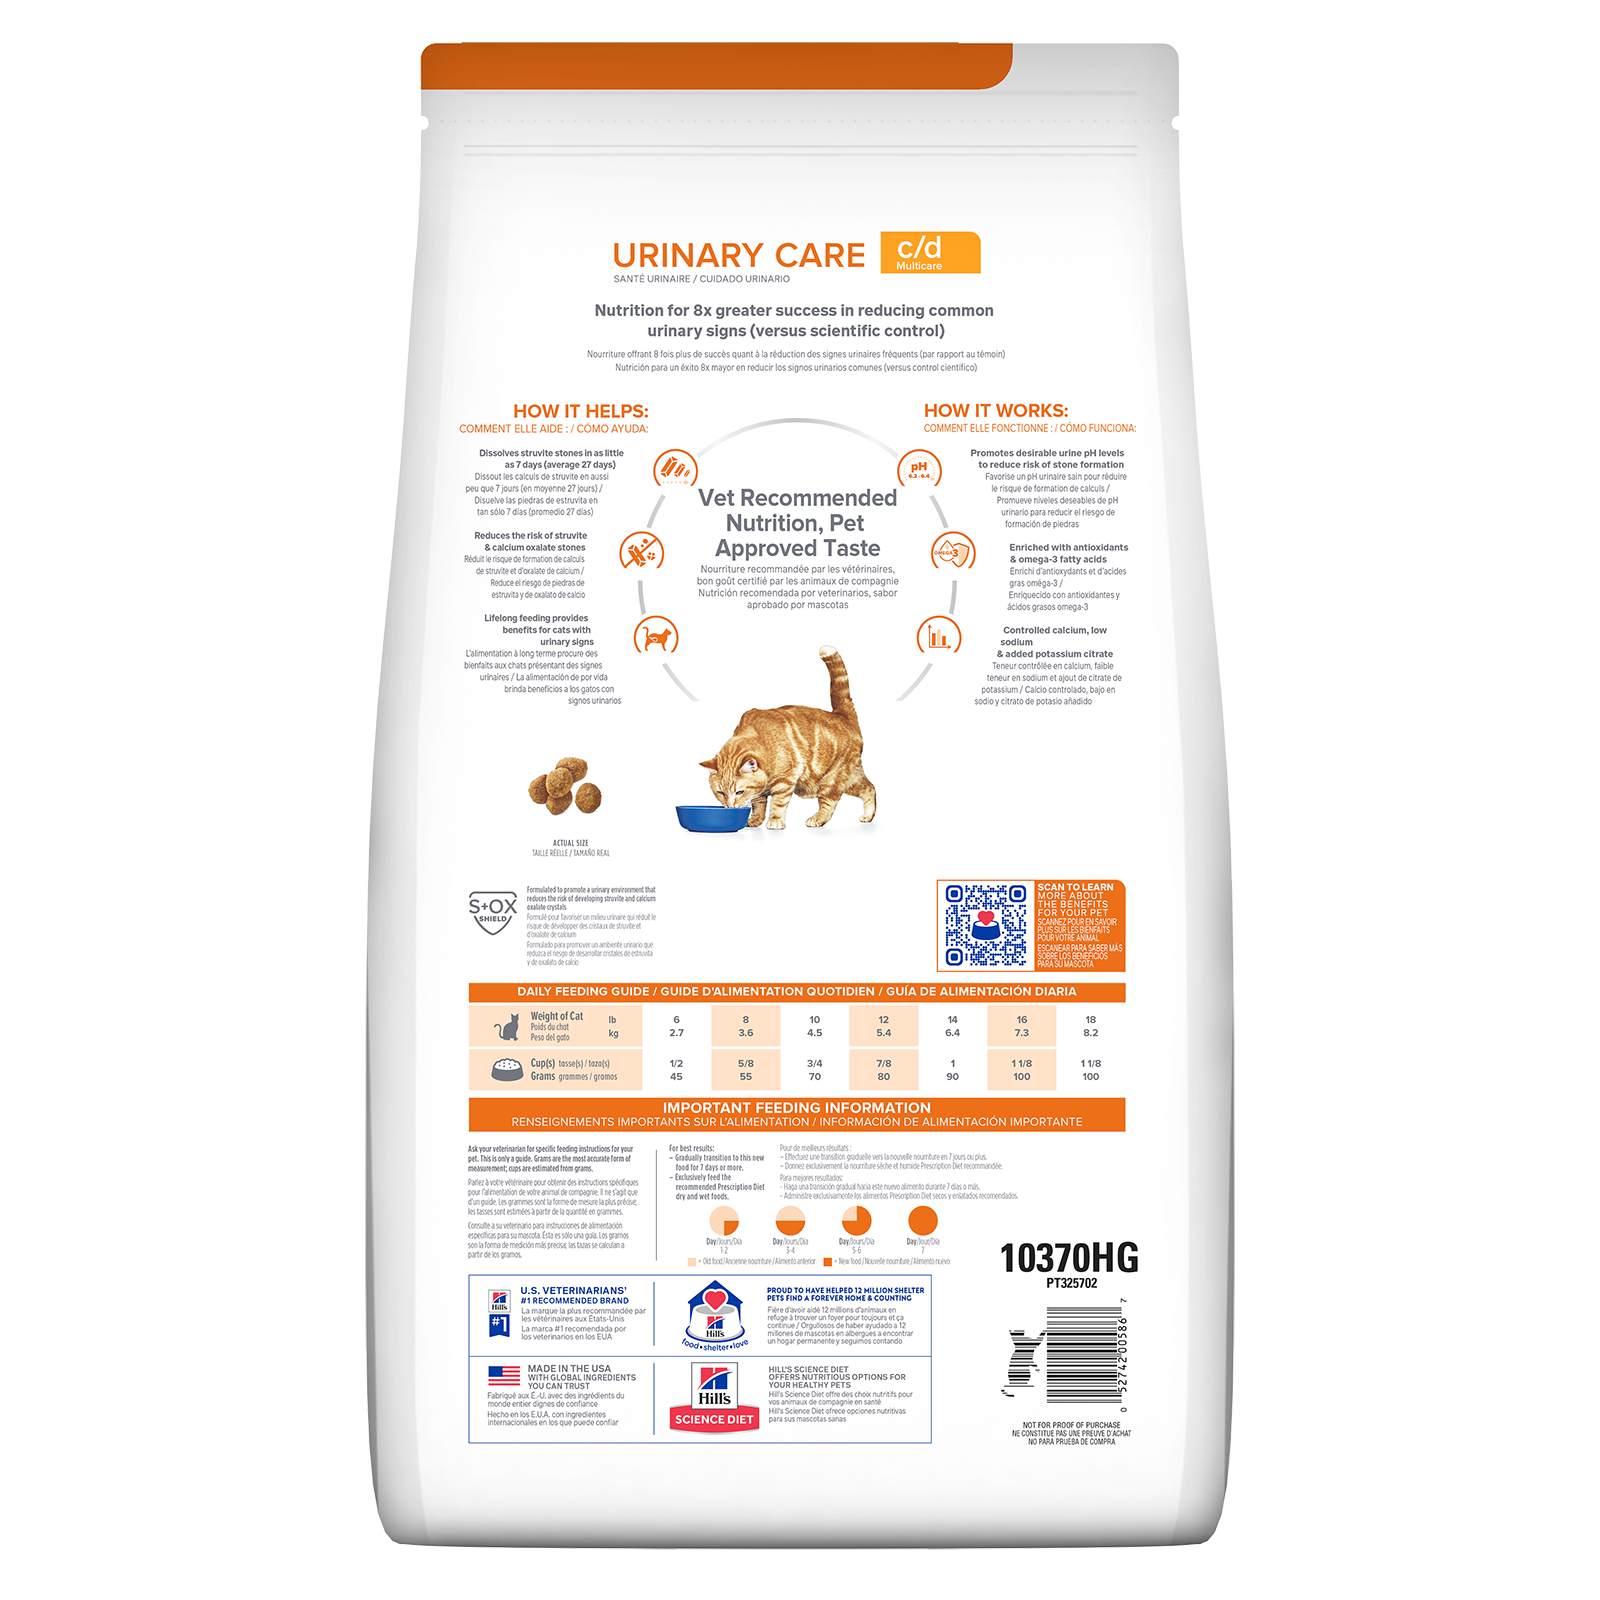 Hill's Prescription Diet Cat Food c/d Multicare Urinary Care